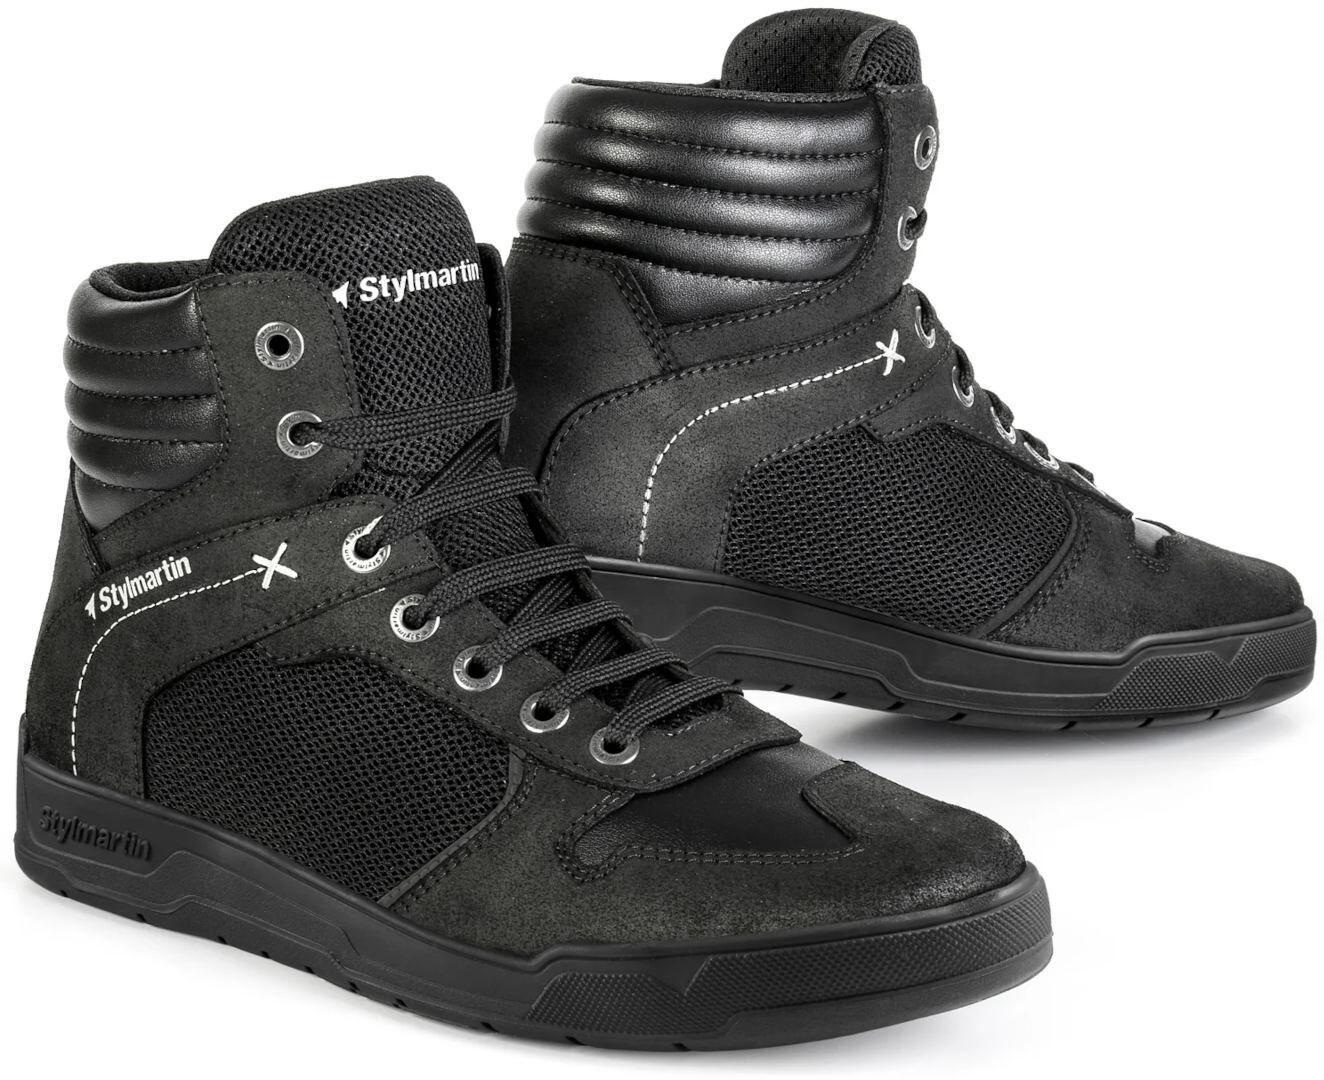 Stylmartin Atom Evo Zapatos de moto - Negro (45)